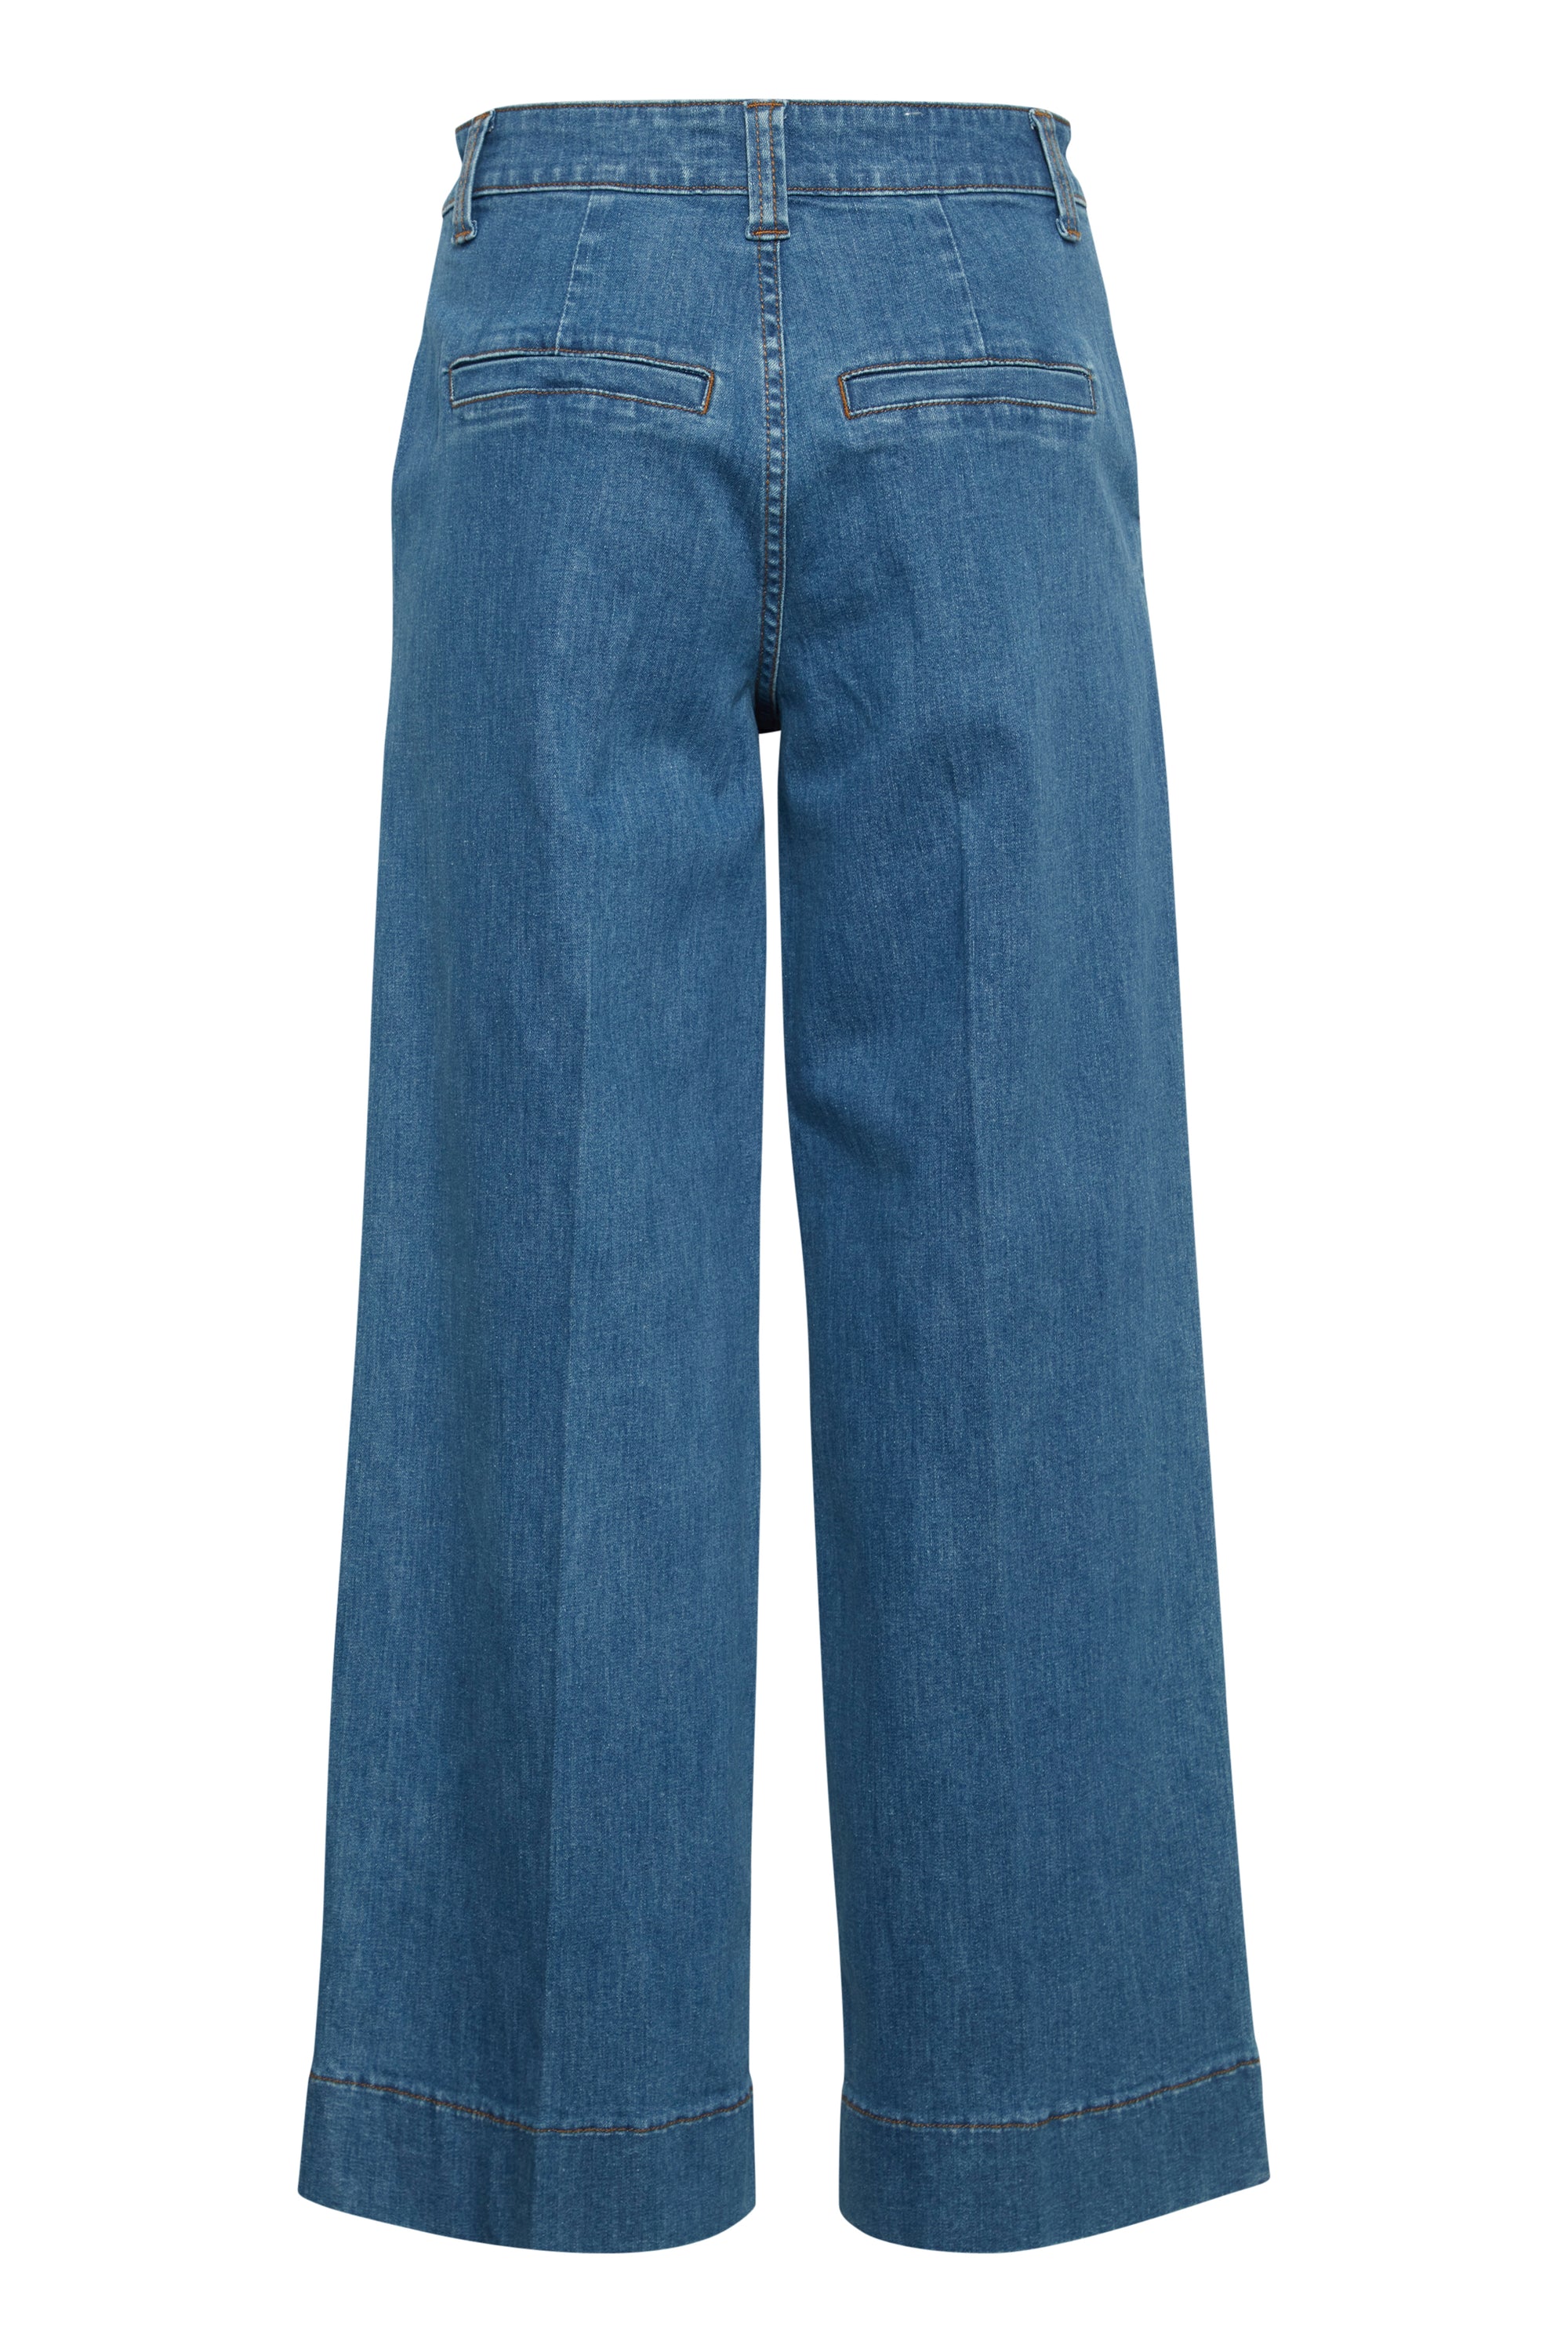 Kato jeans light blue - B.young